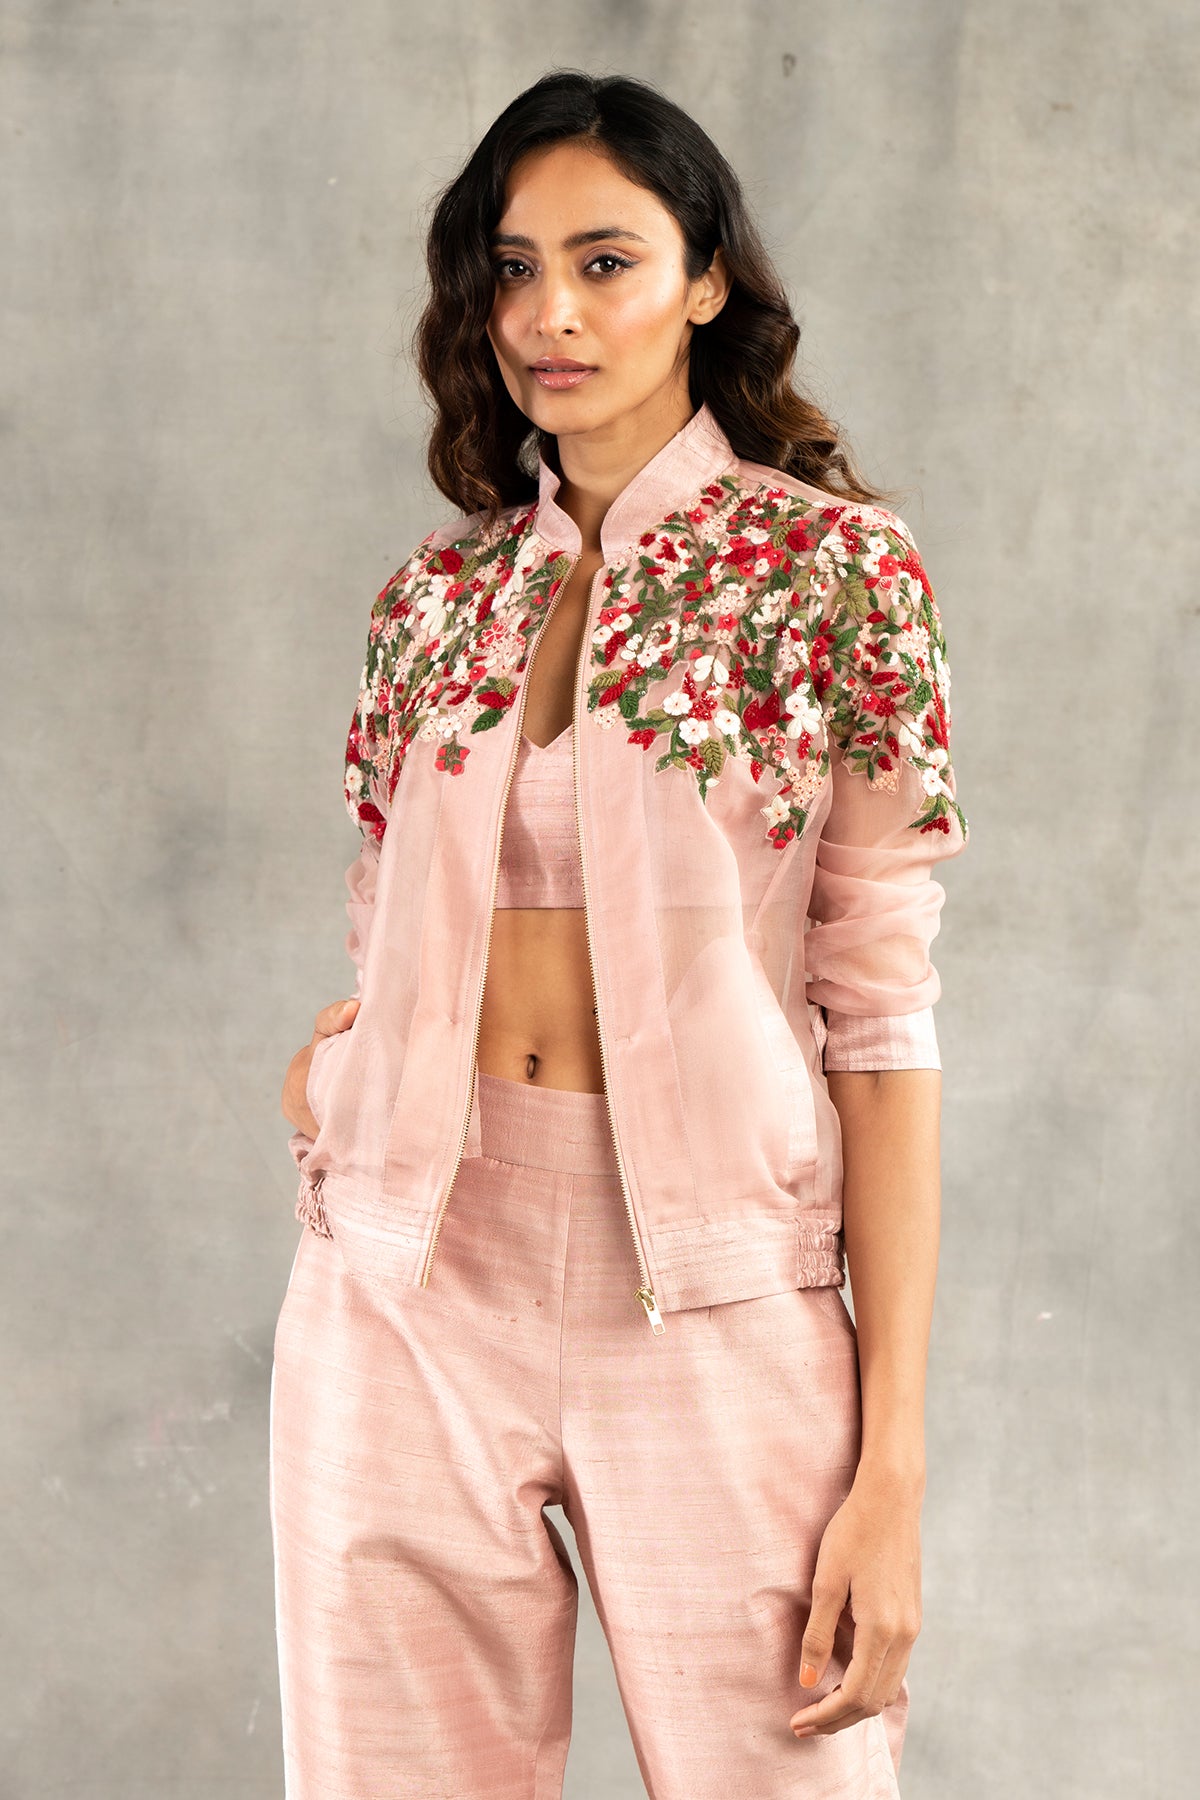 Old rose floral embroidered bomber jacket and pants set